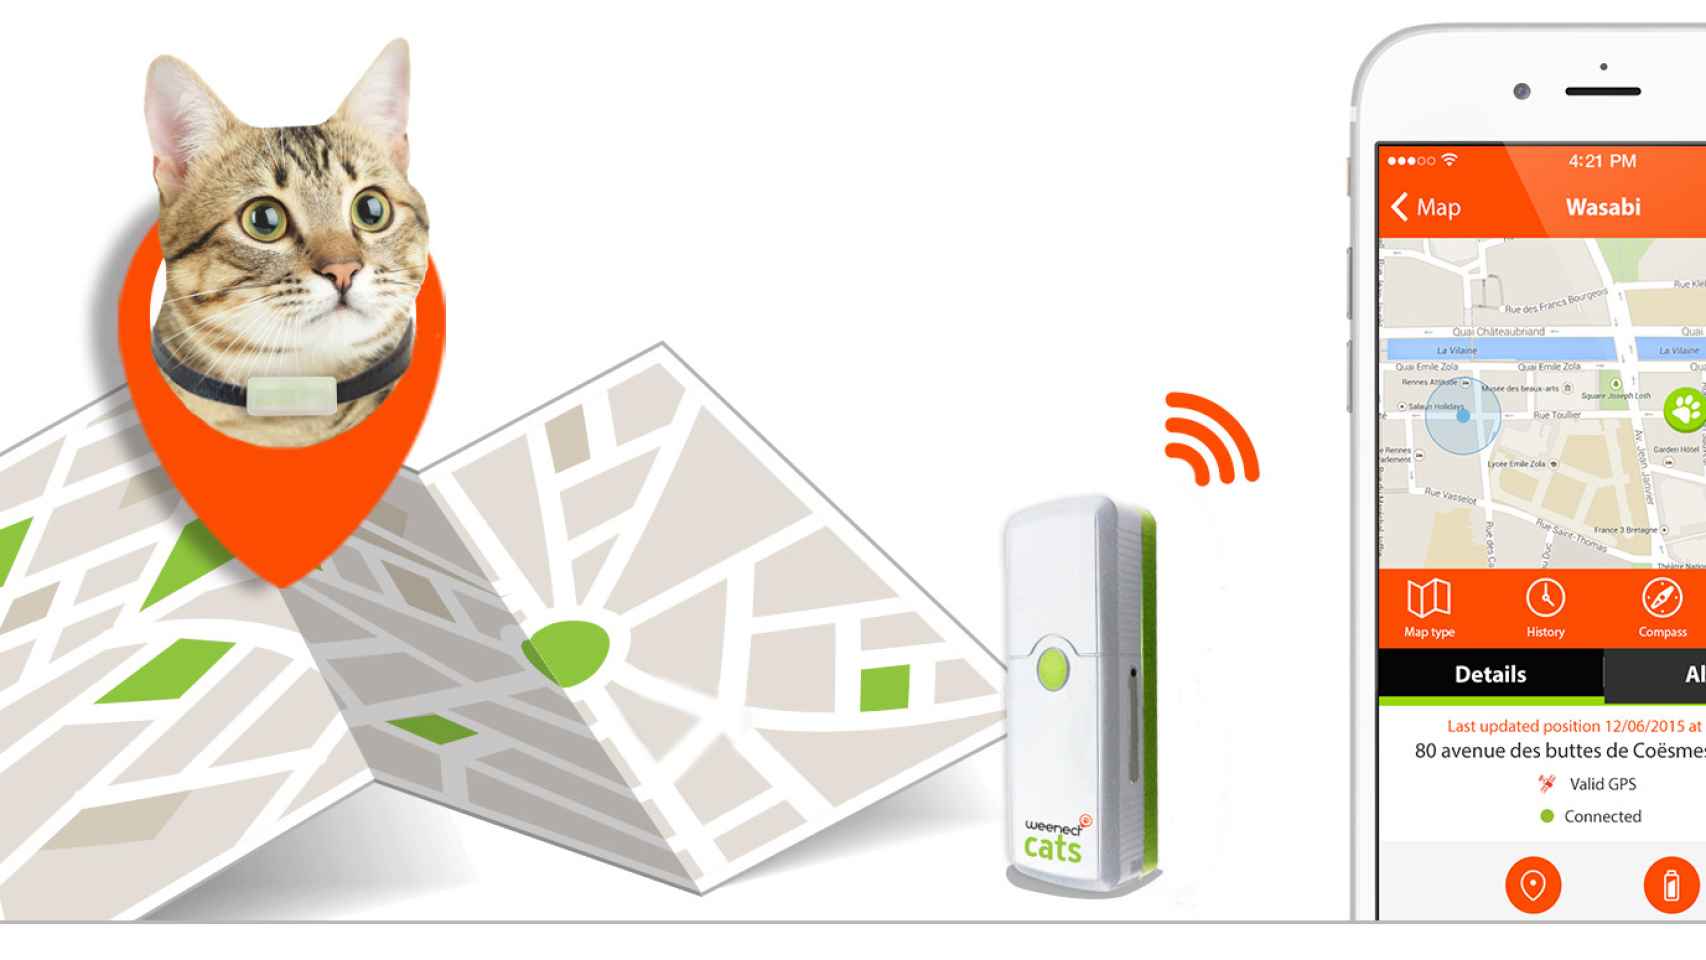 Weenect Cats: El collar-teléfono GPS para gatos